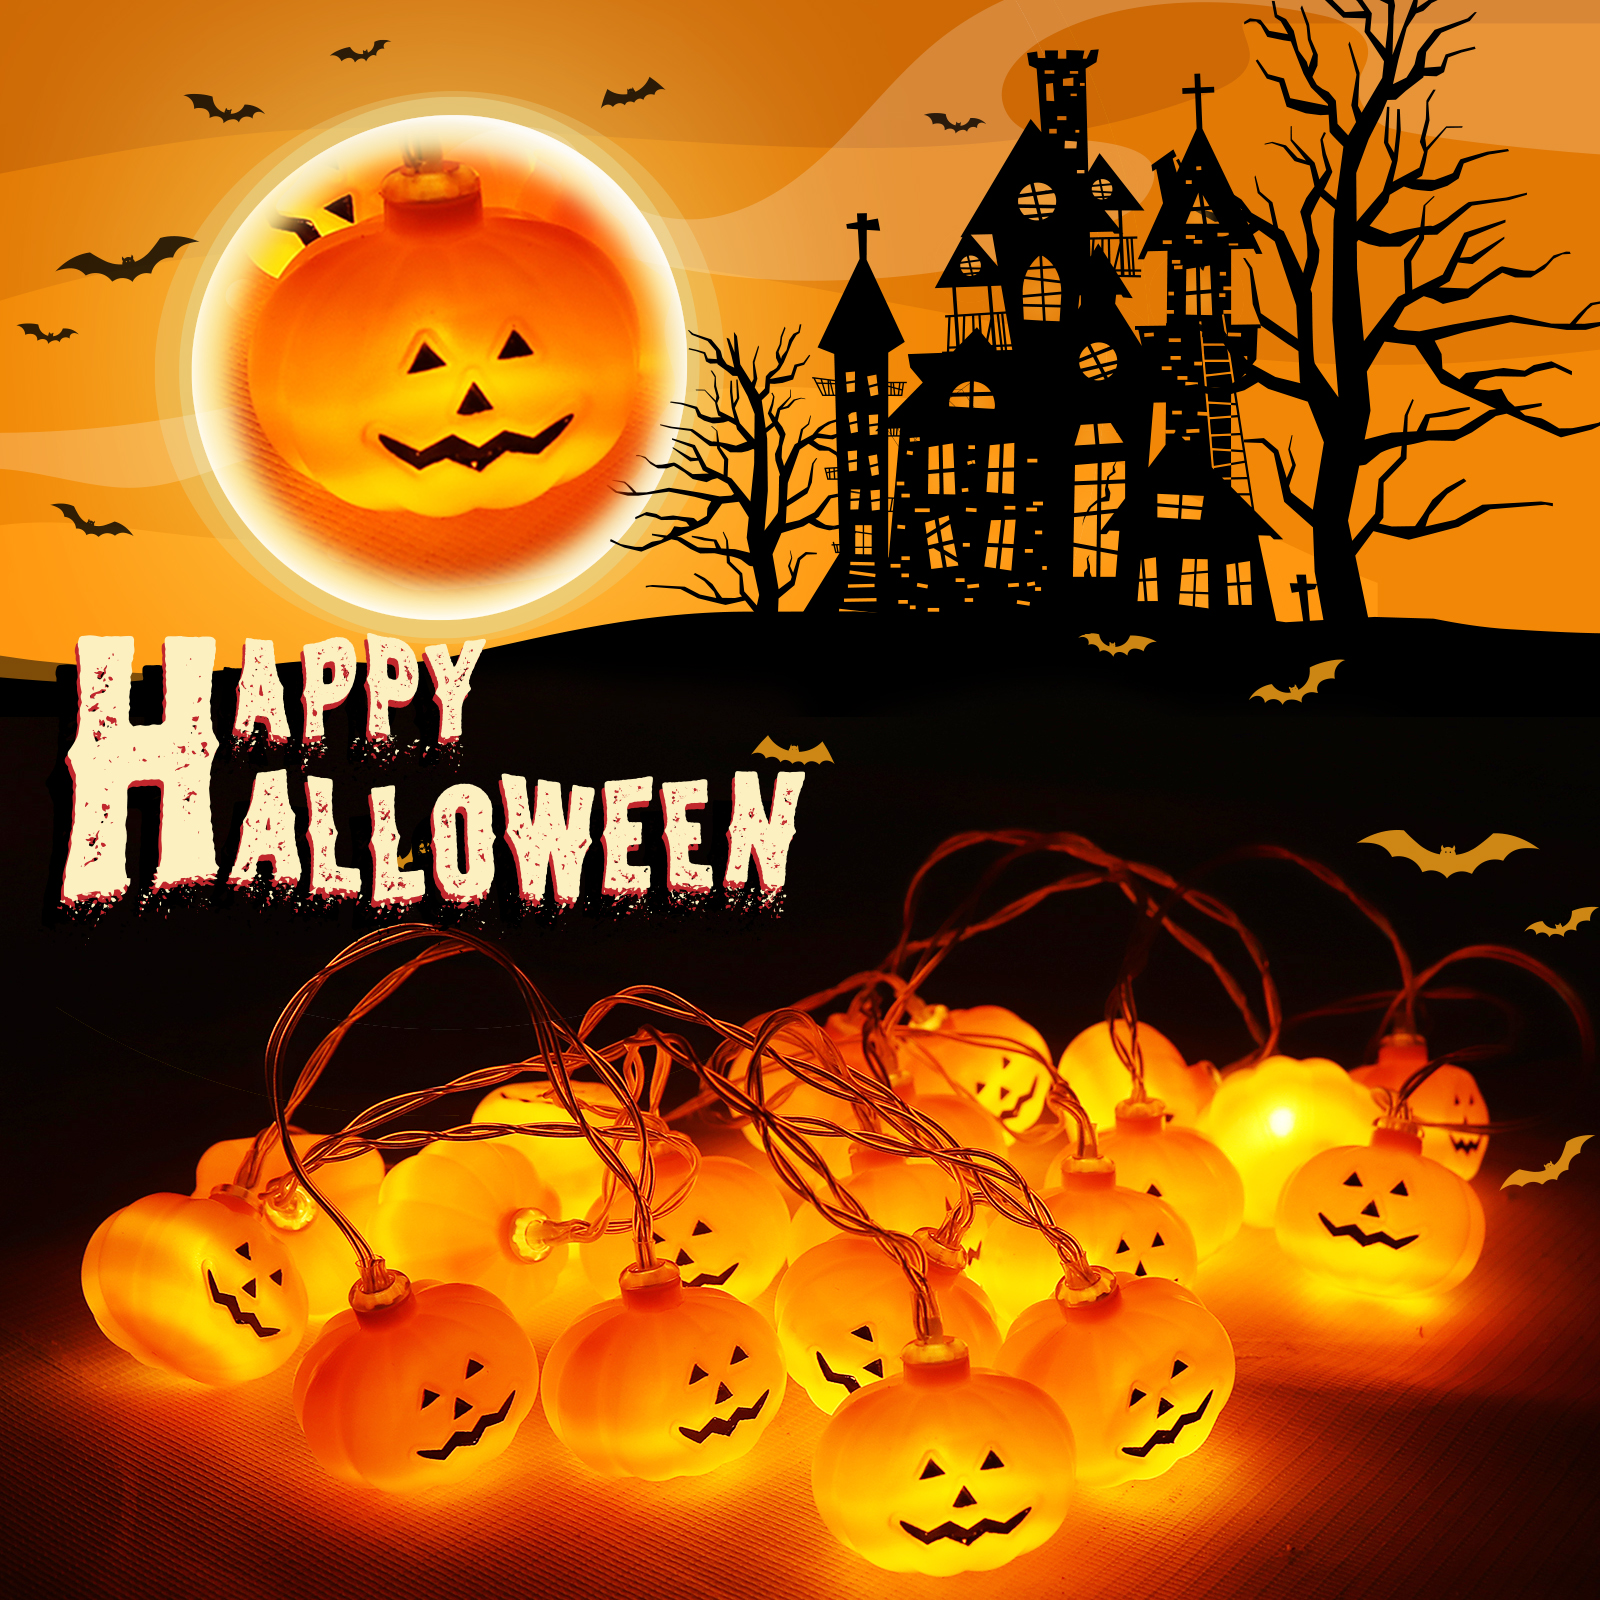 98ft-Halloween-Decorations-20-LED-Pumpkin-String-Lights-Home-Garden-Decor-Warm-White-1890365-1